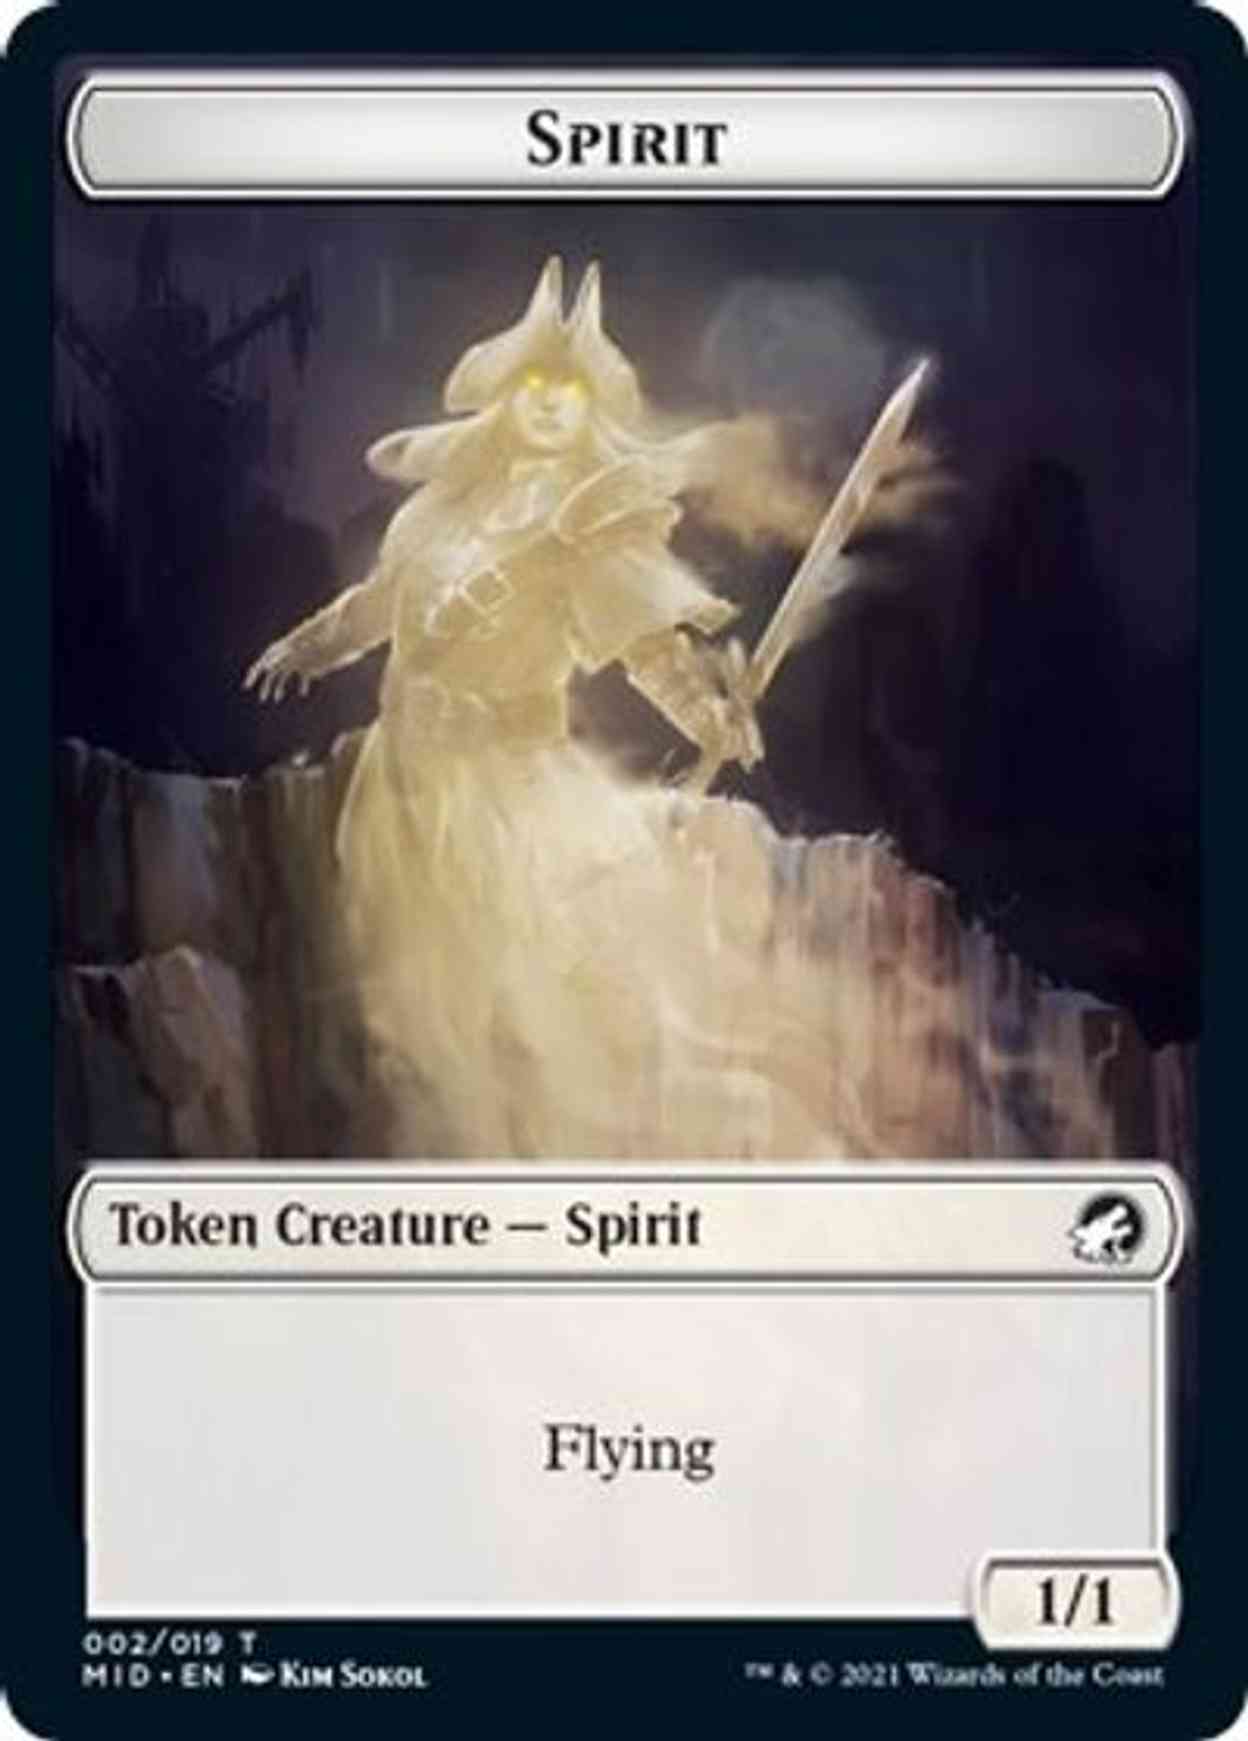 Spirit (002) // Bat (004) Double-sided Token magic card front